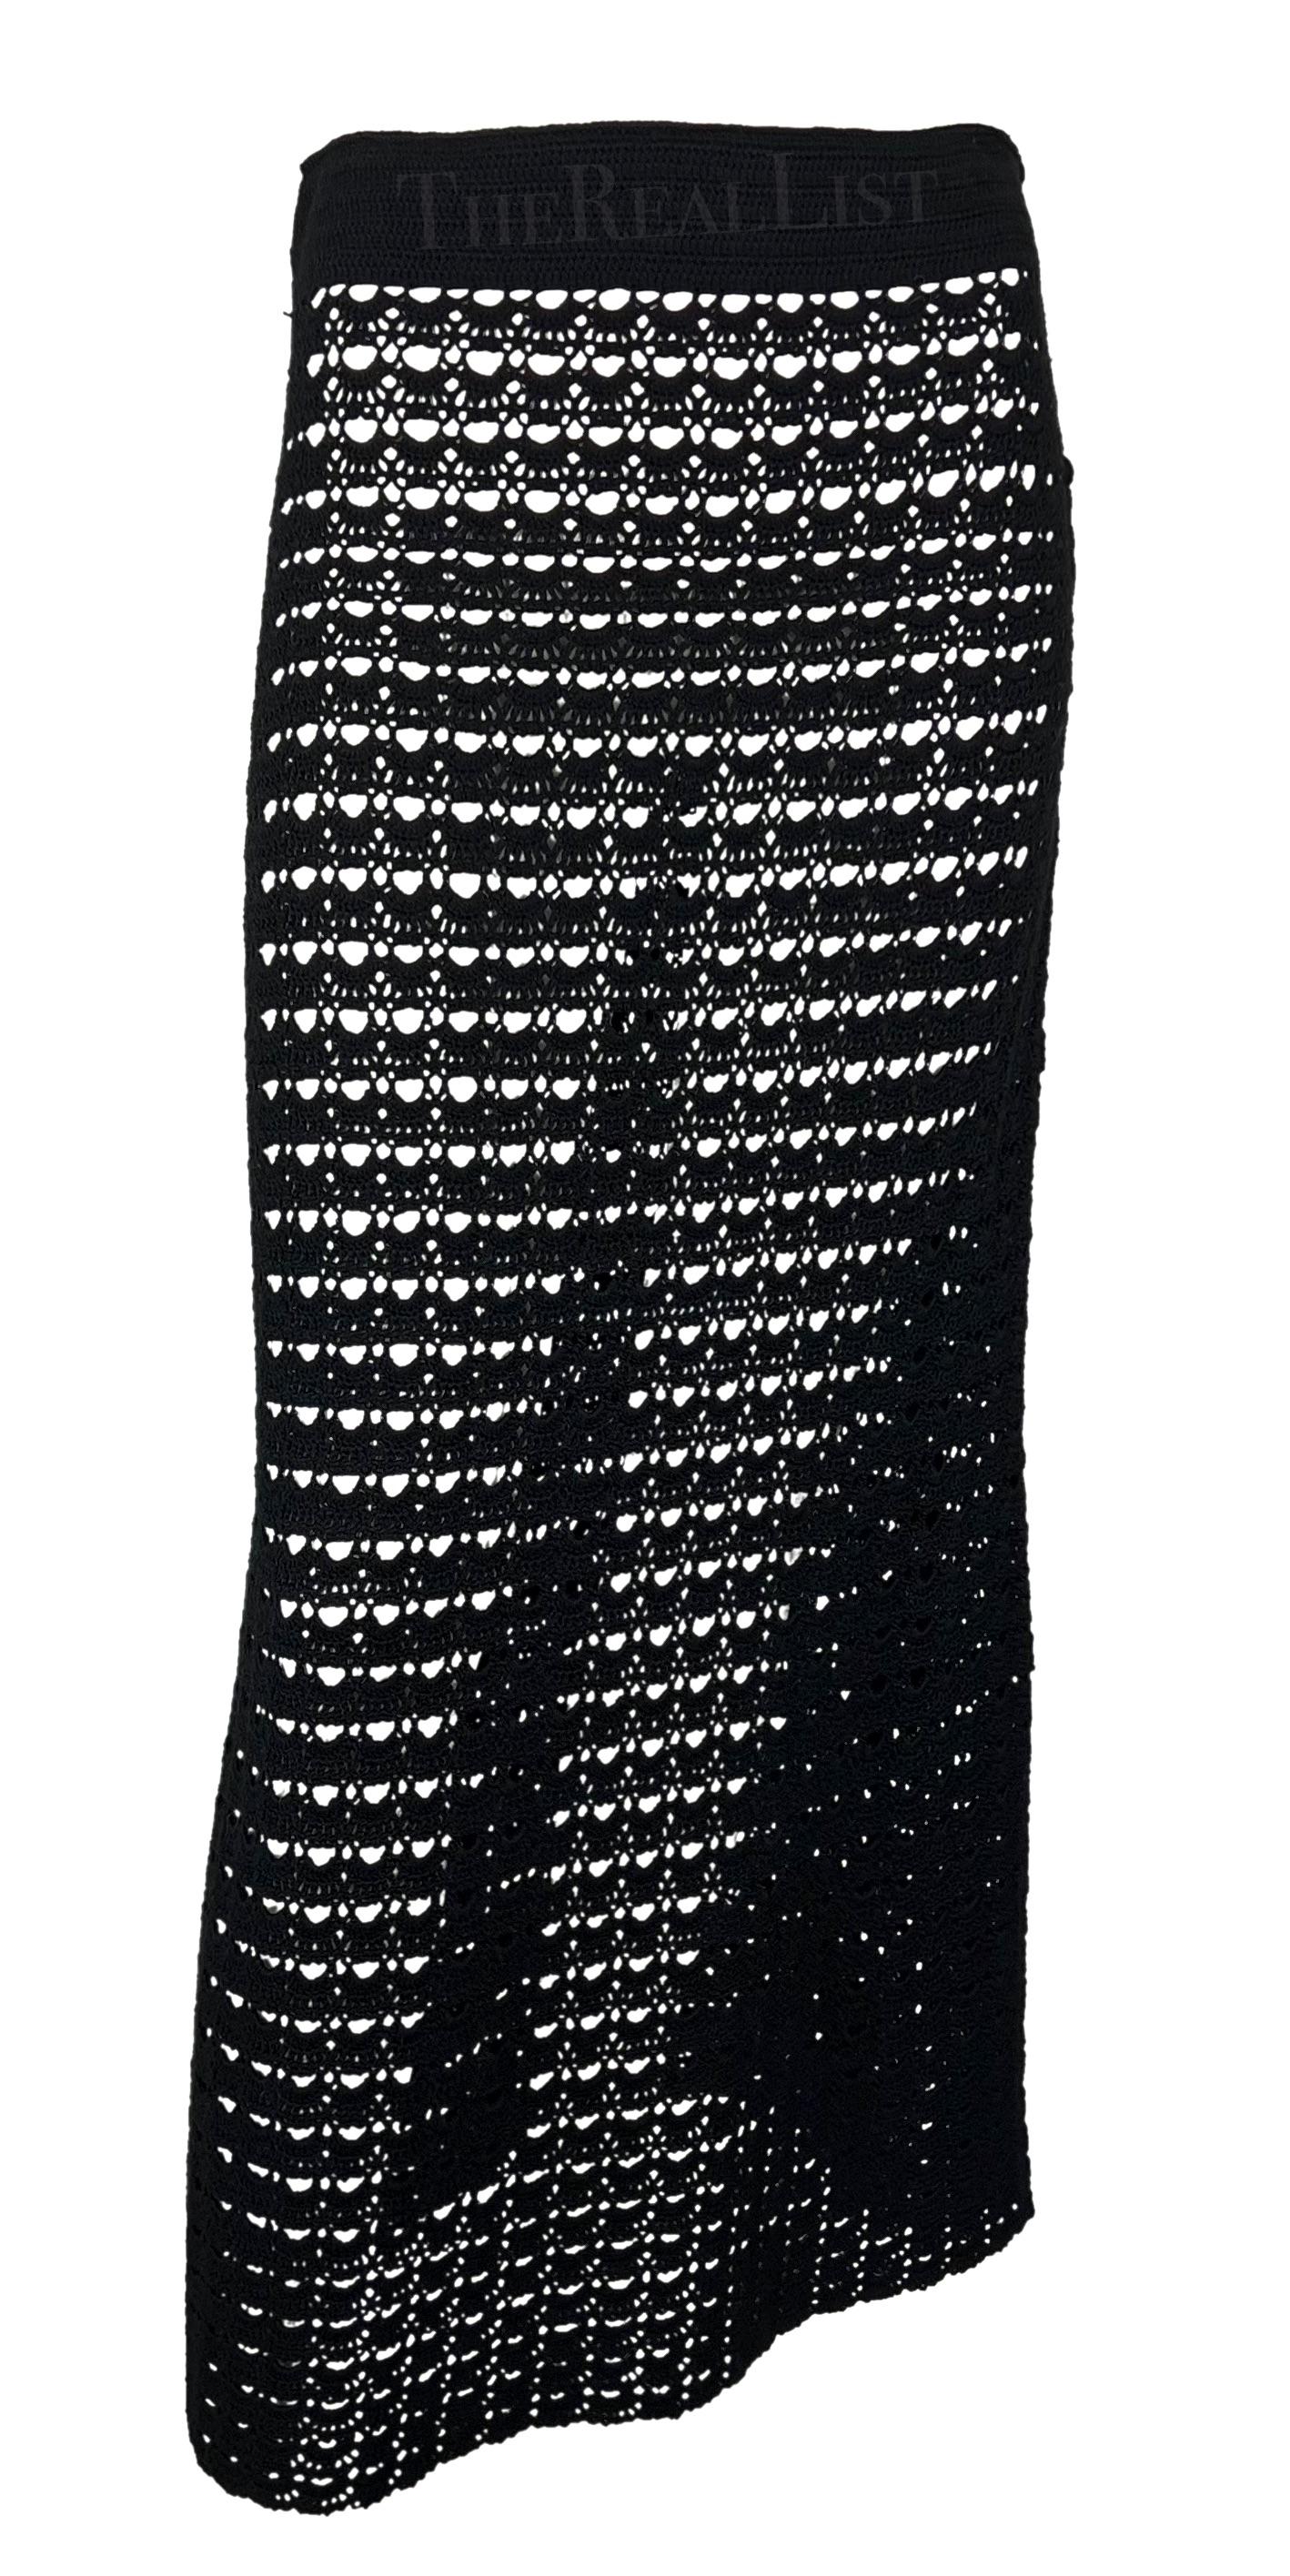 S/S 1997 Dolce and Gabbana Black Knit Crochet Maxi Skirt Wrap Top Skirt ...